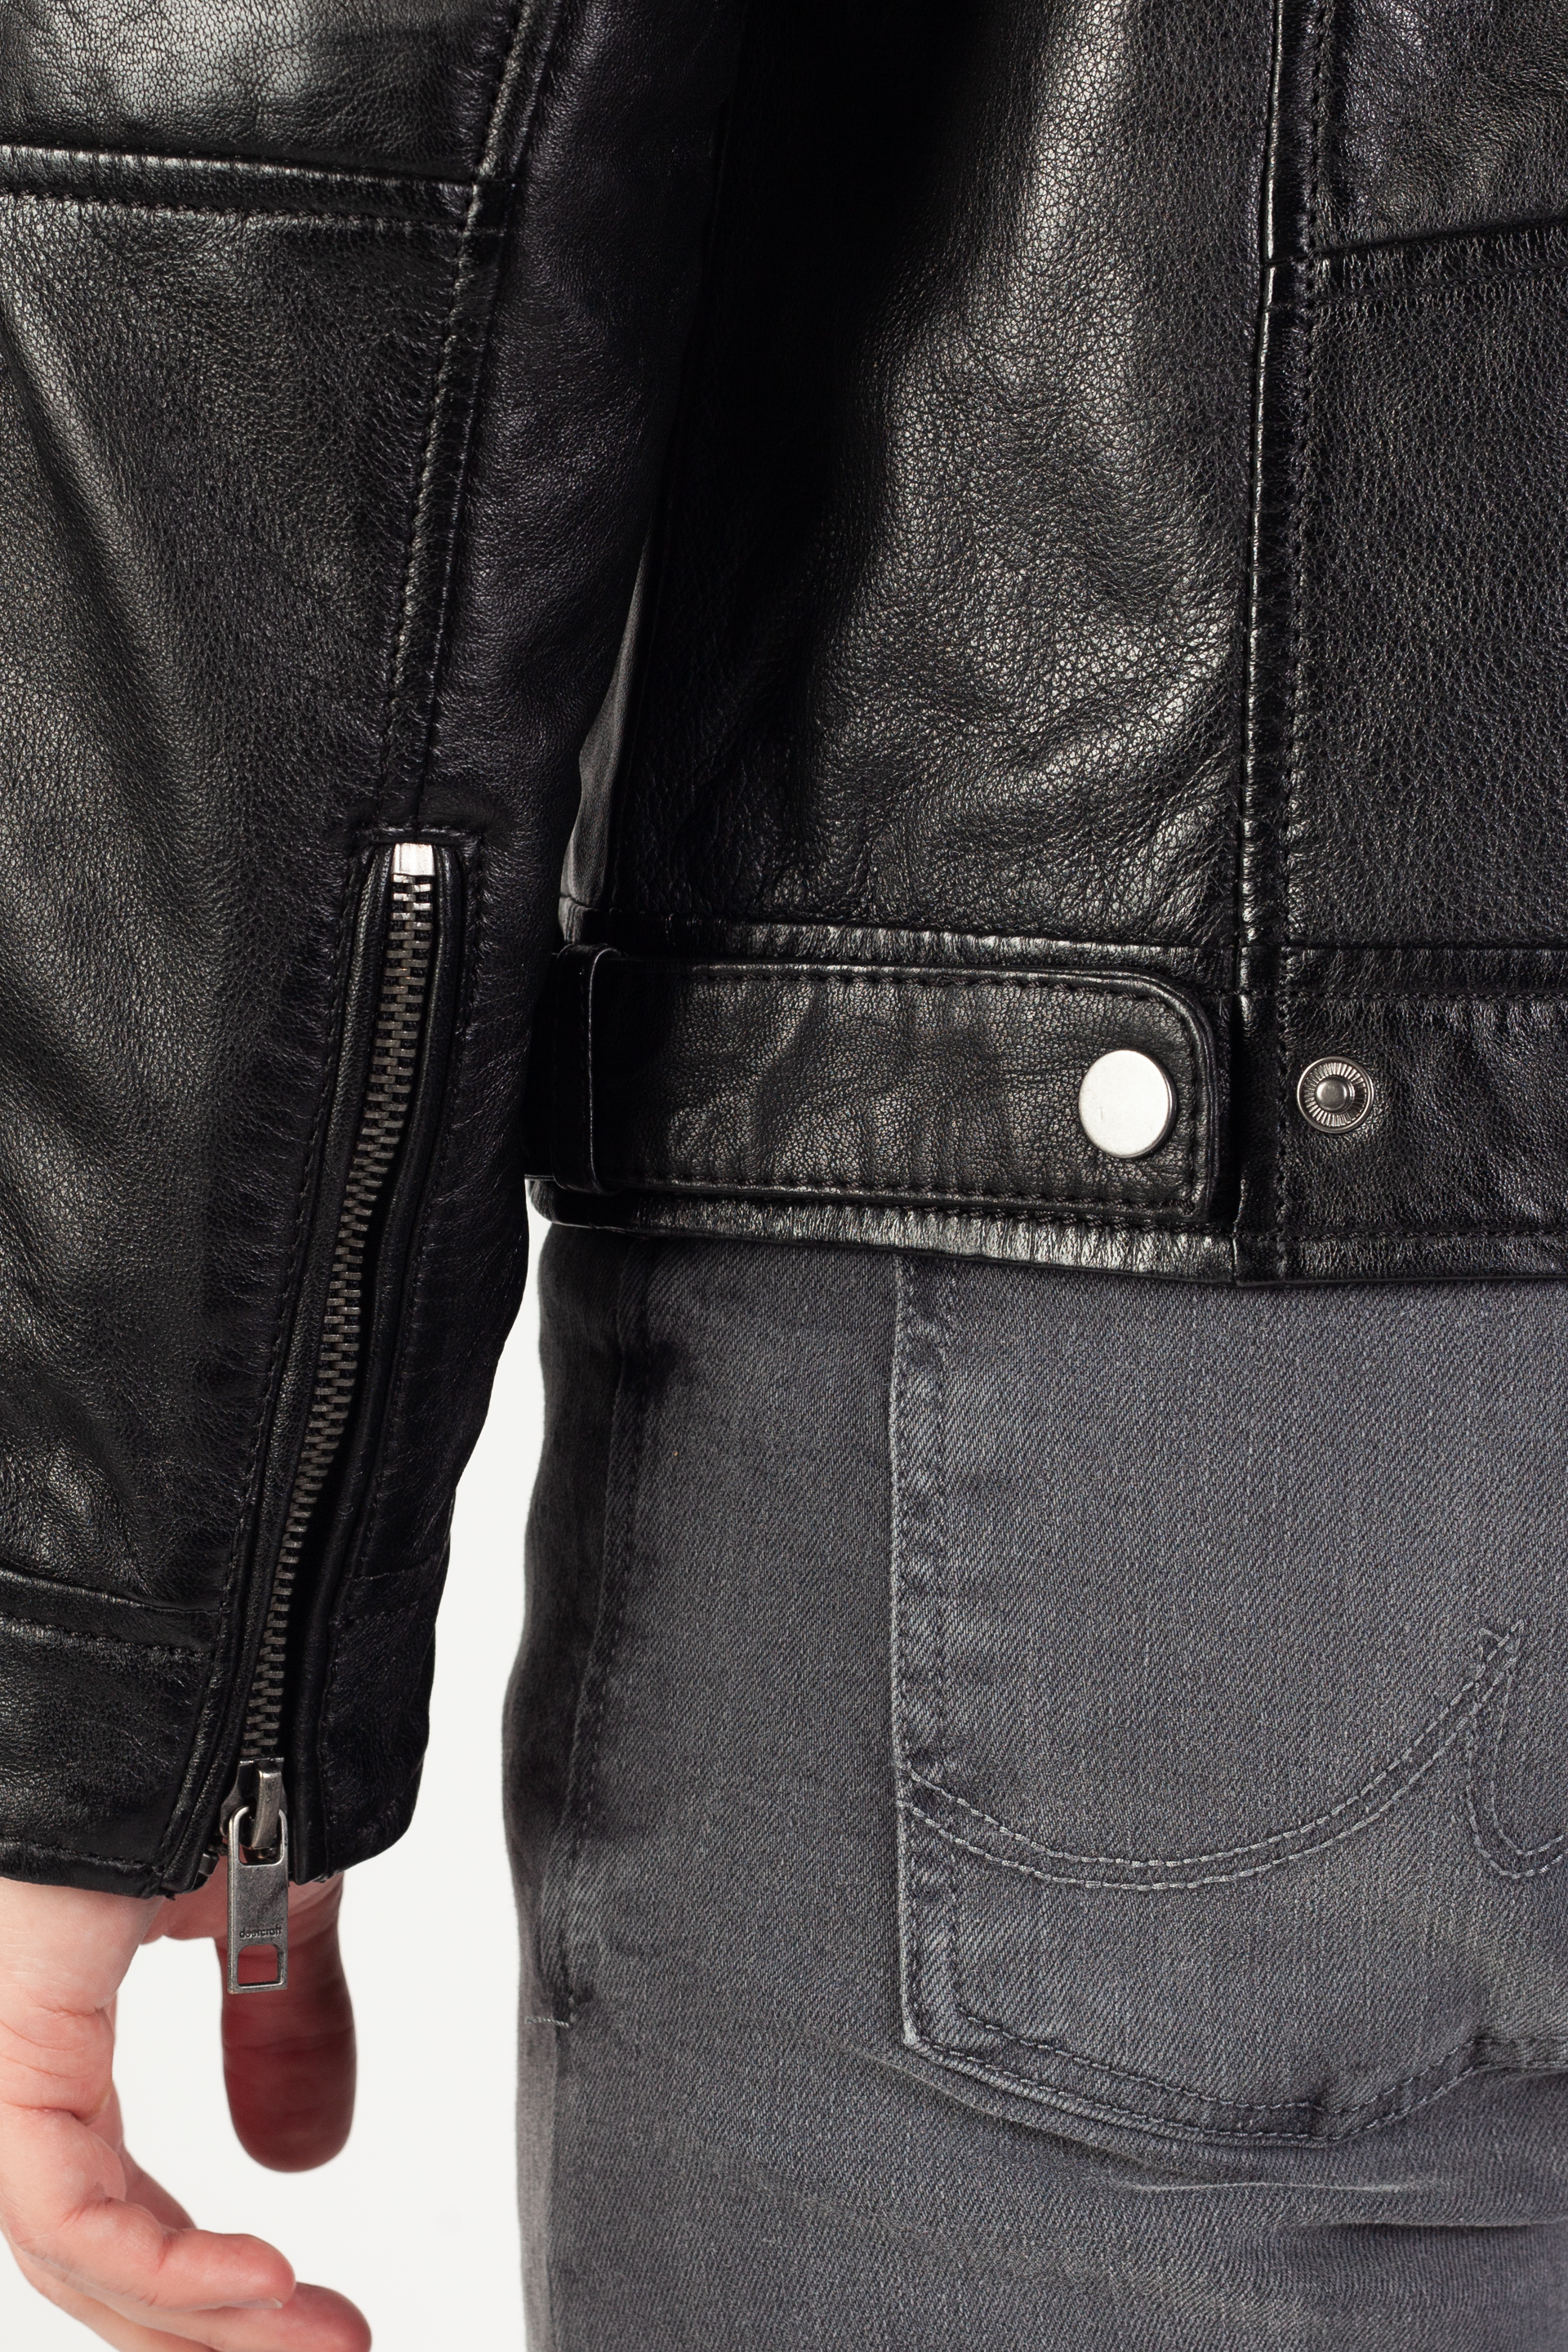 Leather jacket DEERCRAFT DMIsmael-LASV-black